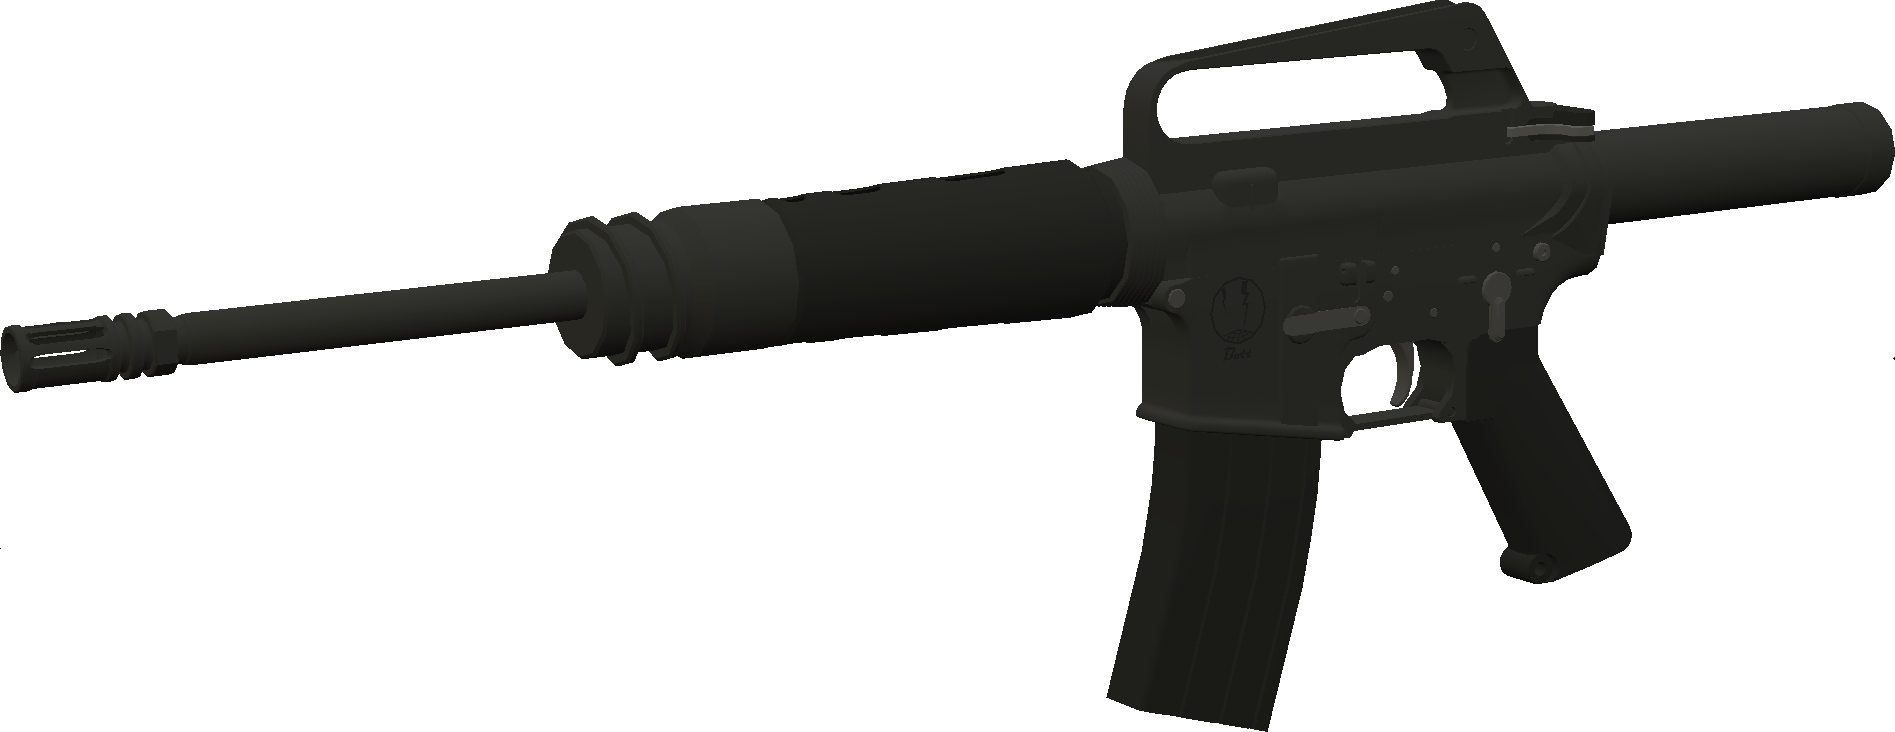 HK417, Phantom Forces Wiki